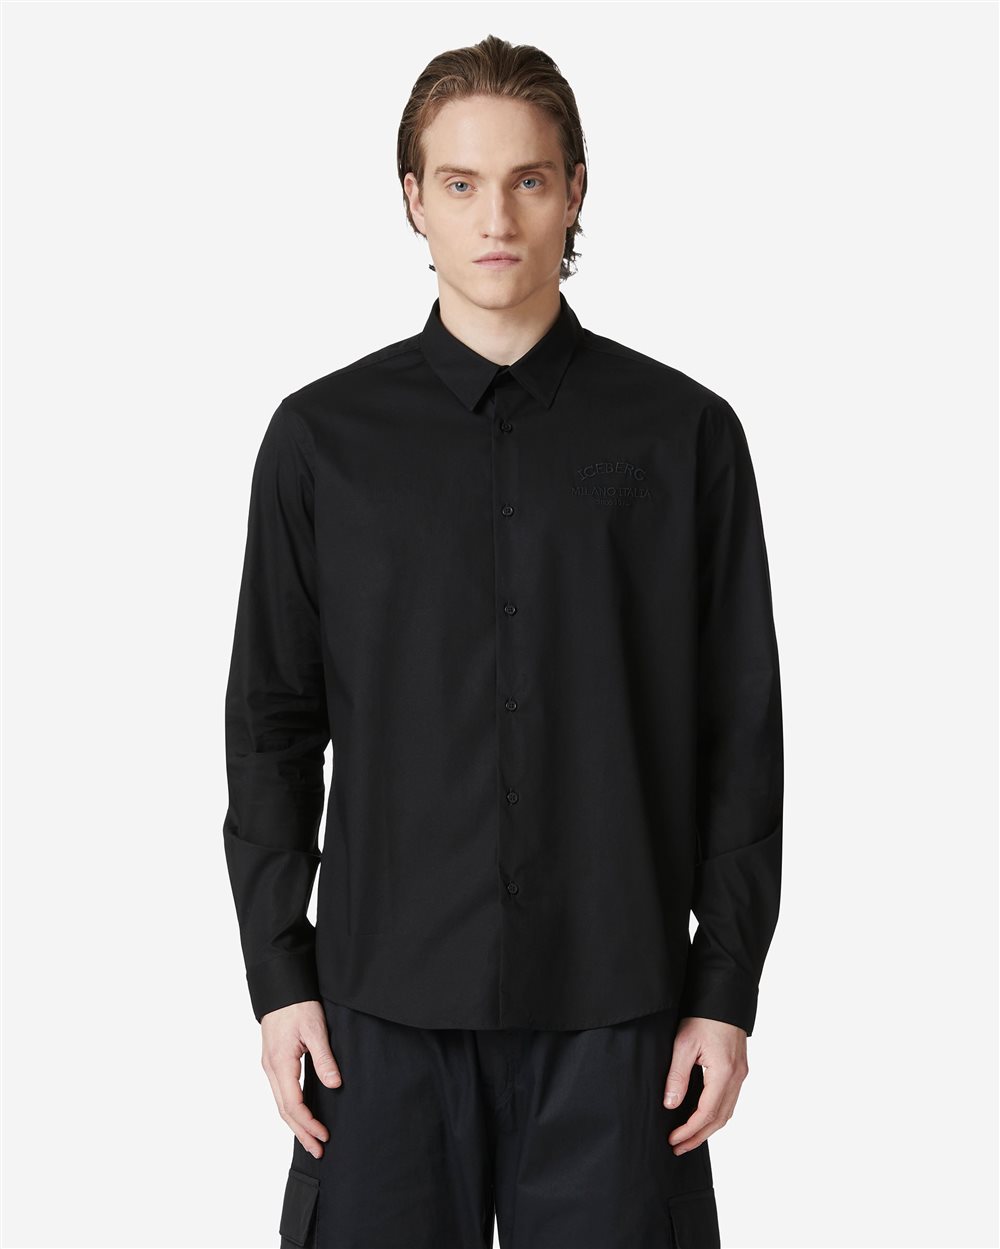 Black shirt with logo - Iceberg - Official Website